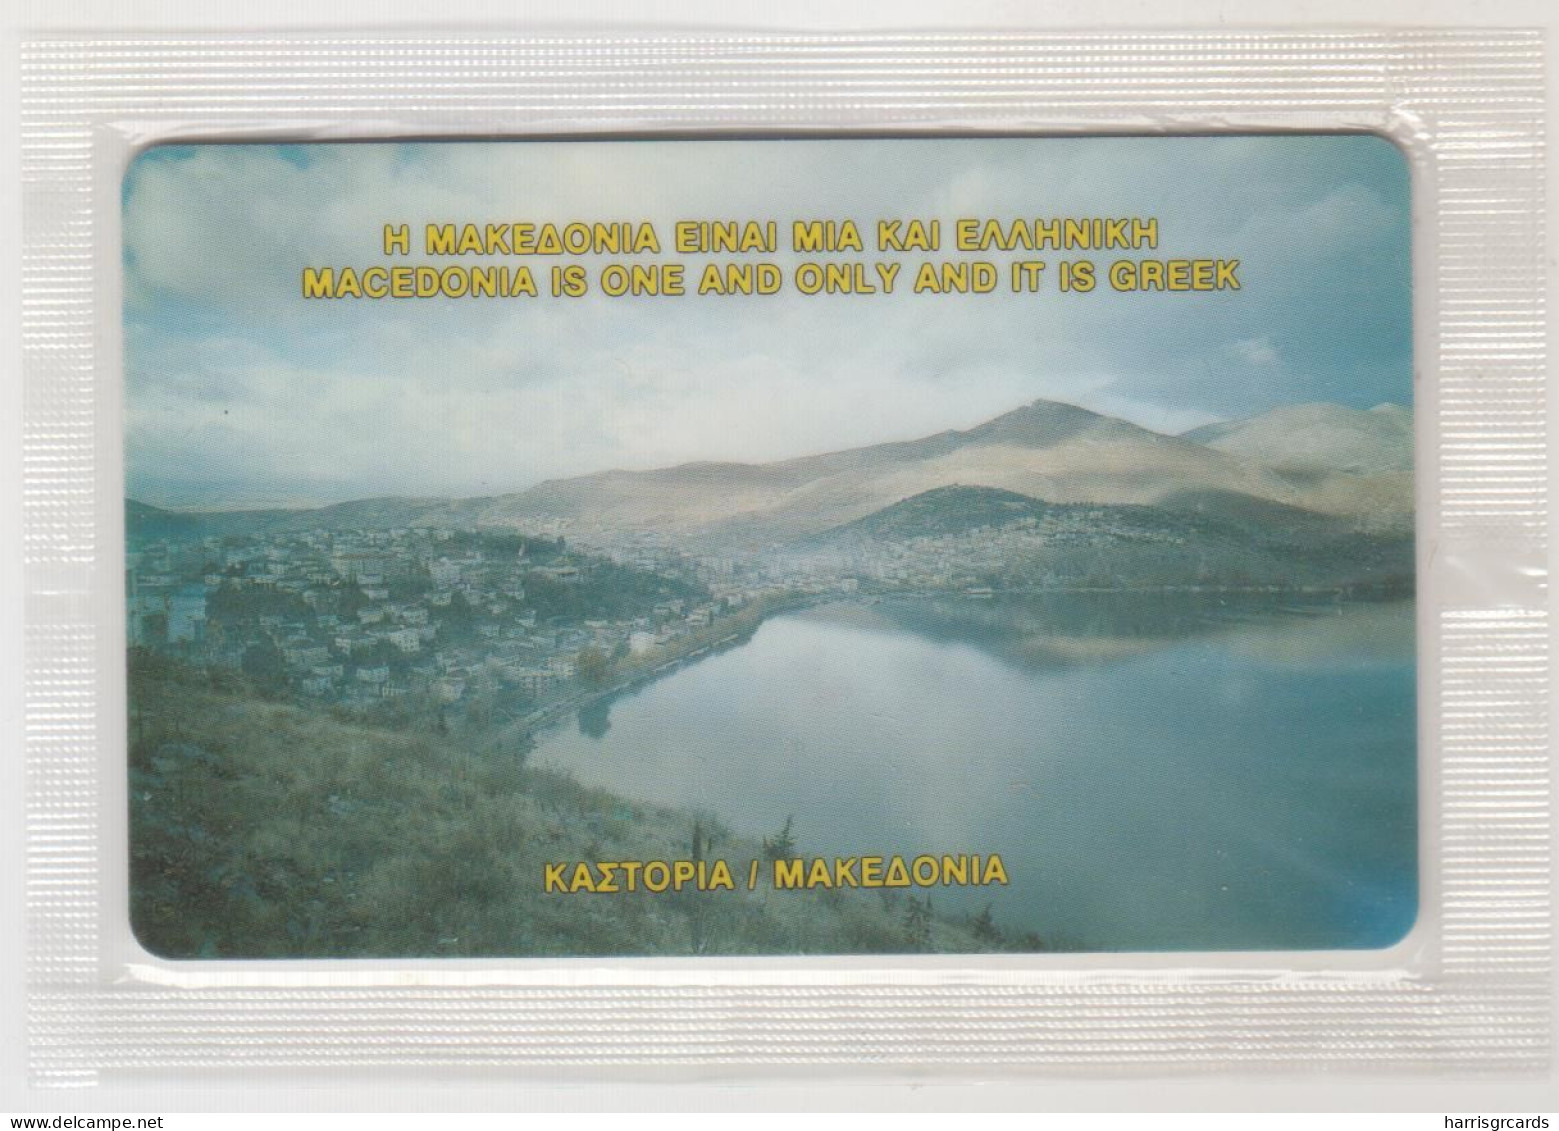 GREECE - Kastoria, Y006, CN :1OOO Letraset Writing , 06/93, Mint - Griechenland